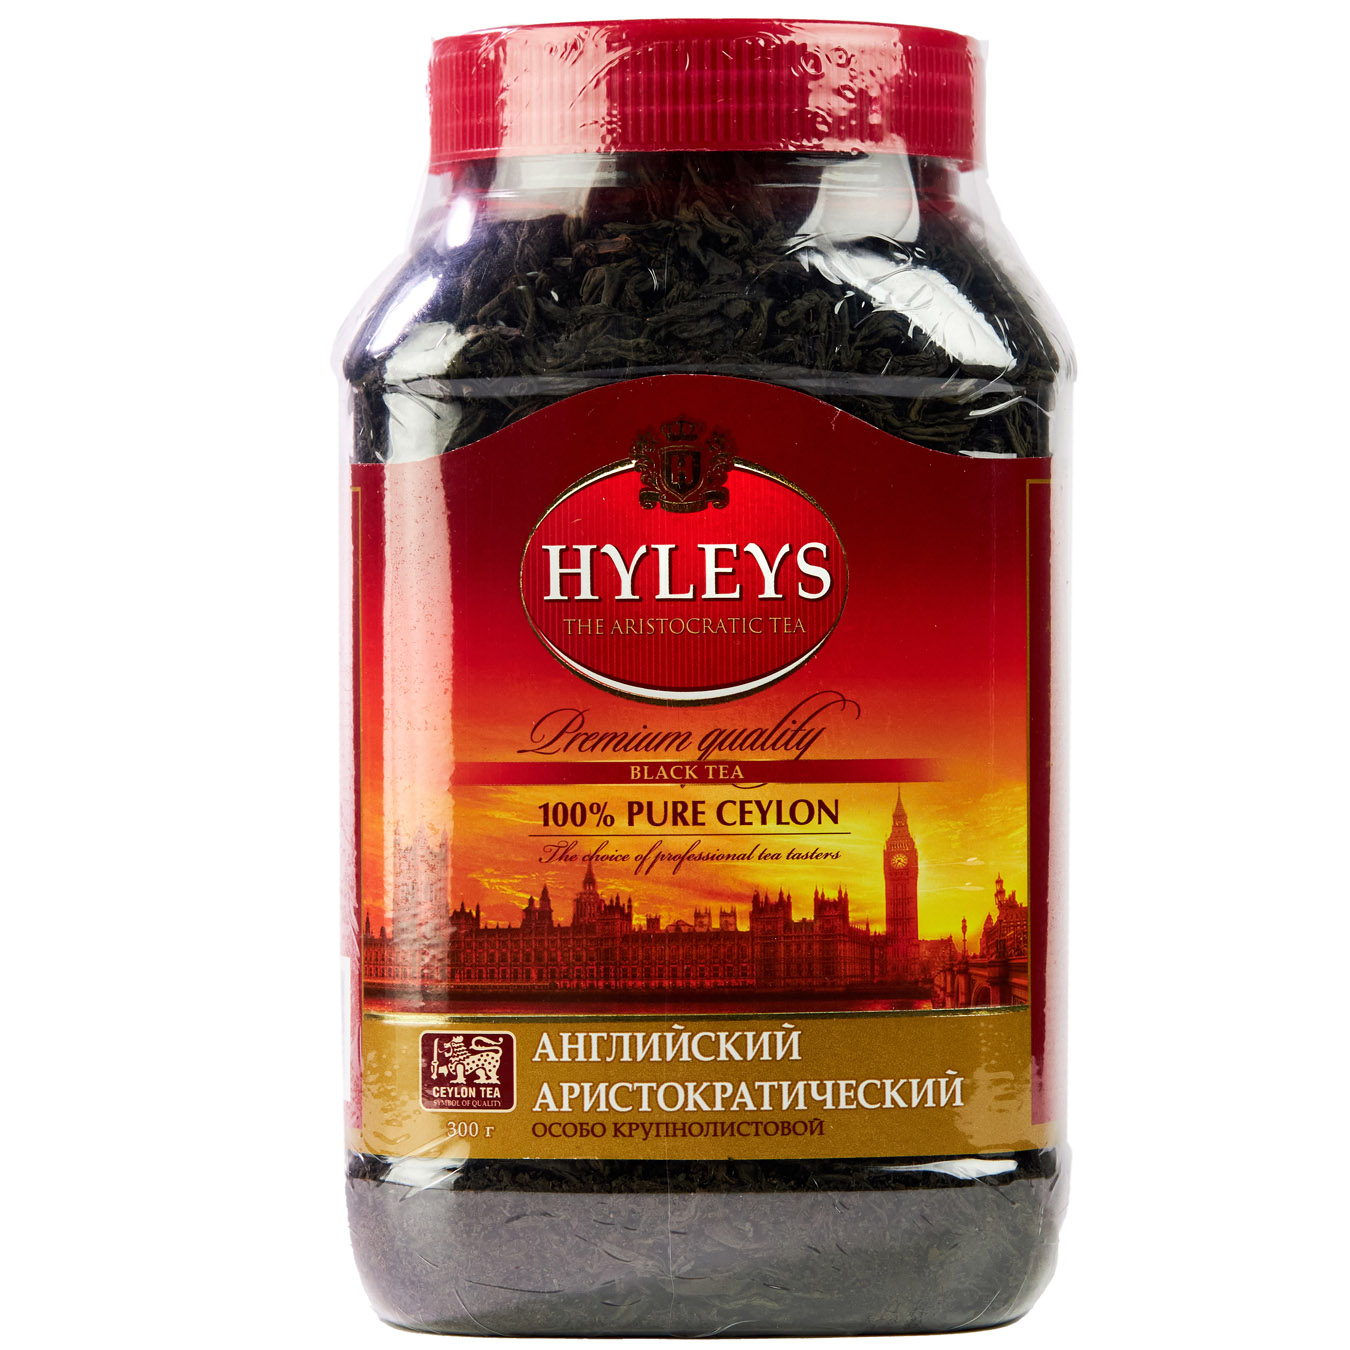 Hyleys English Aristocratic Black Tea 300g